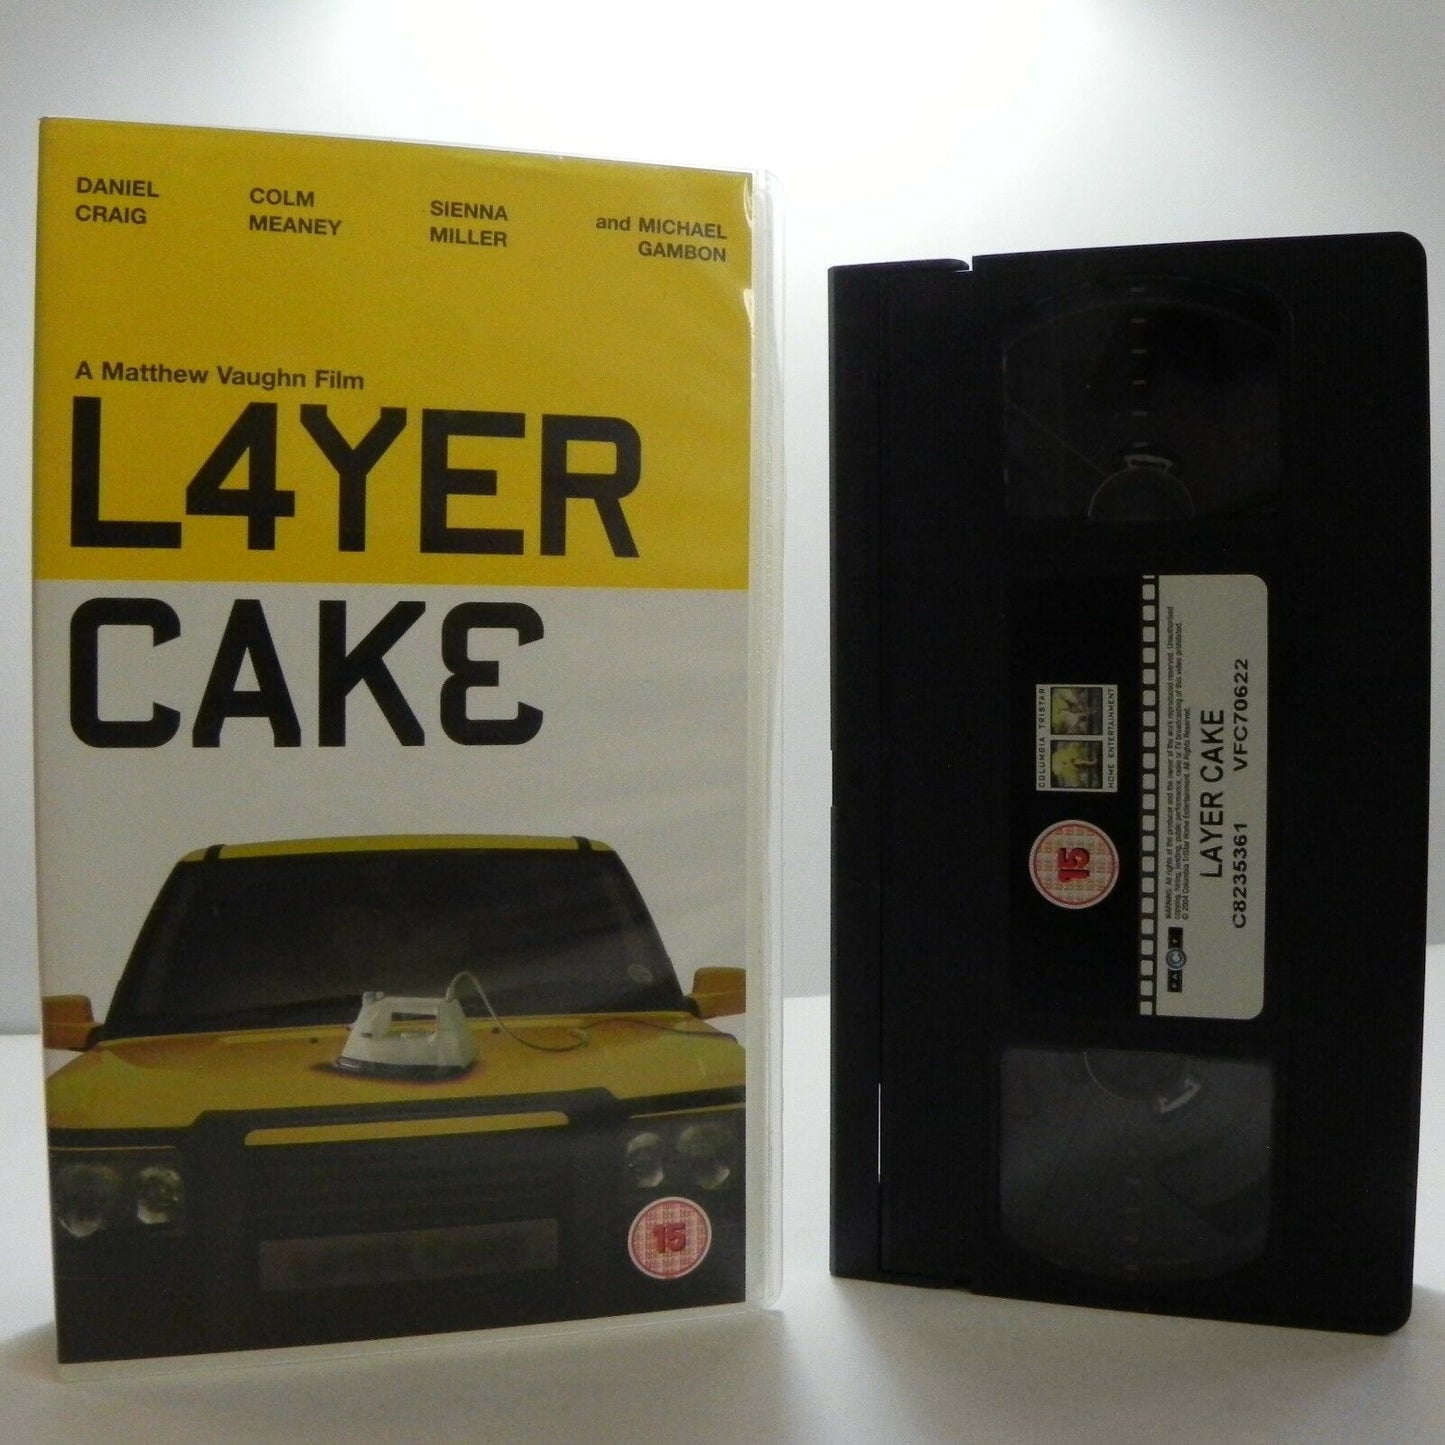 Layer Cake: By M.Vaughn - Columbia (2003) - Crime Thriller - Daniel Craig - VHS-